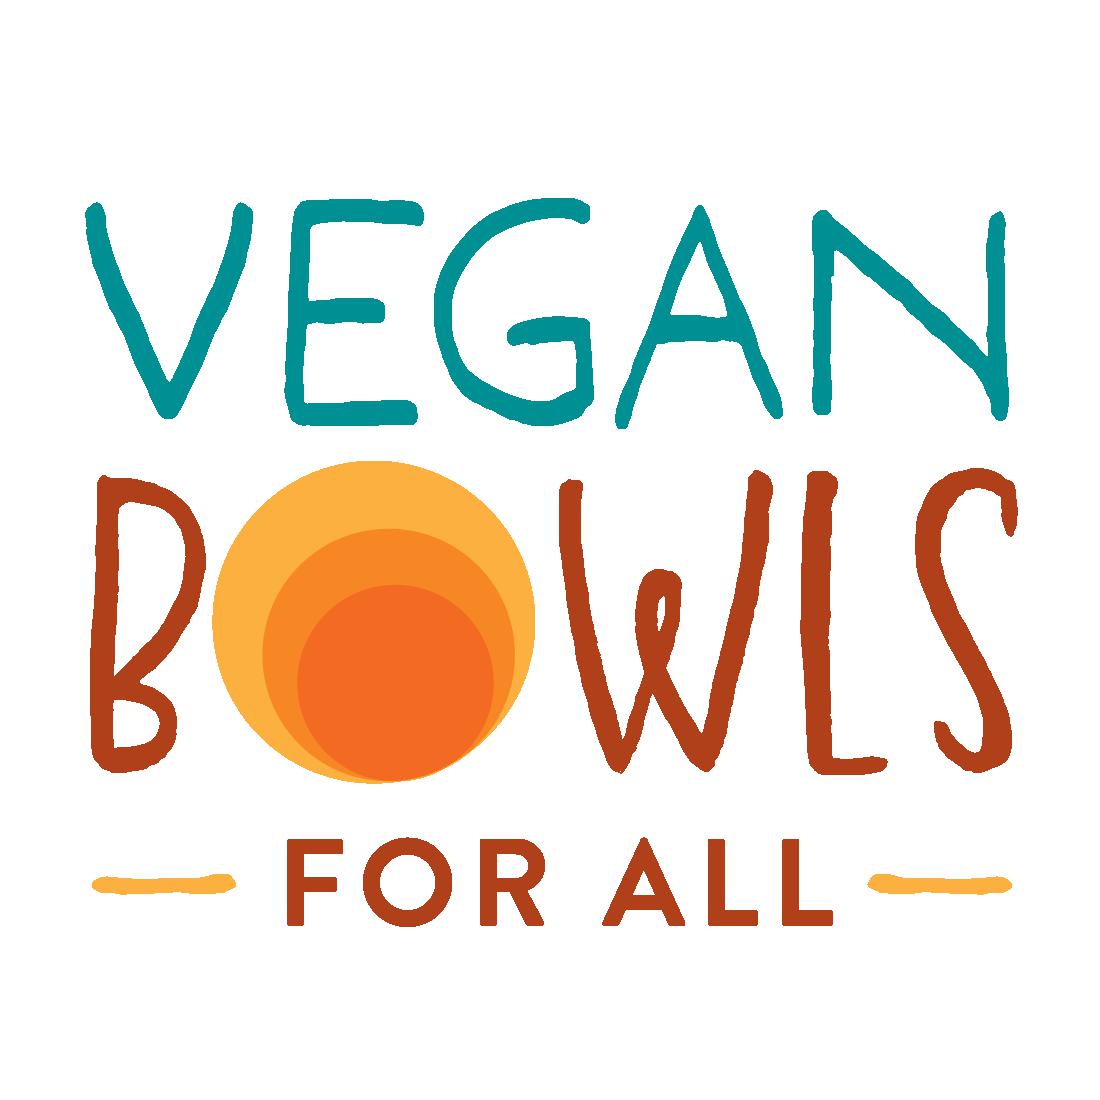 Vegan Bowls For All - Santa Monica